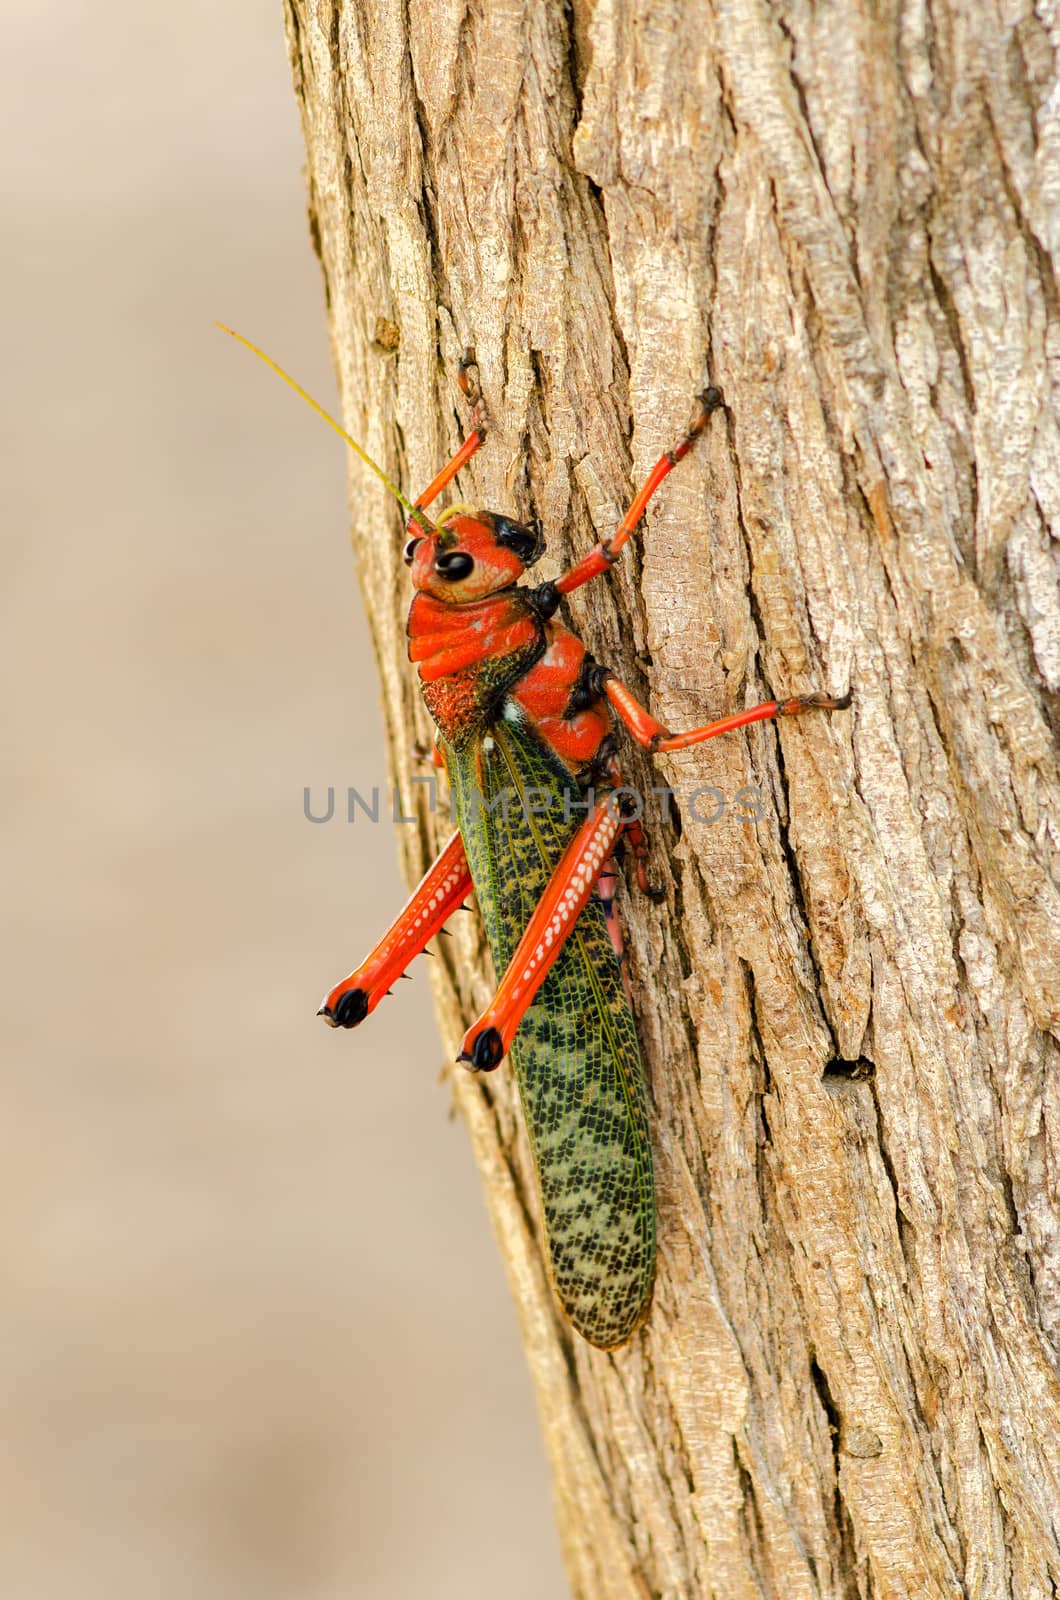 Large Grasshopper by jkraft5